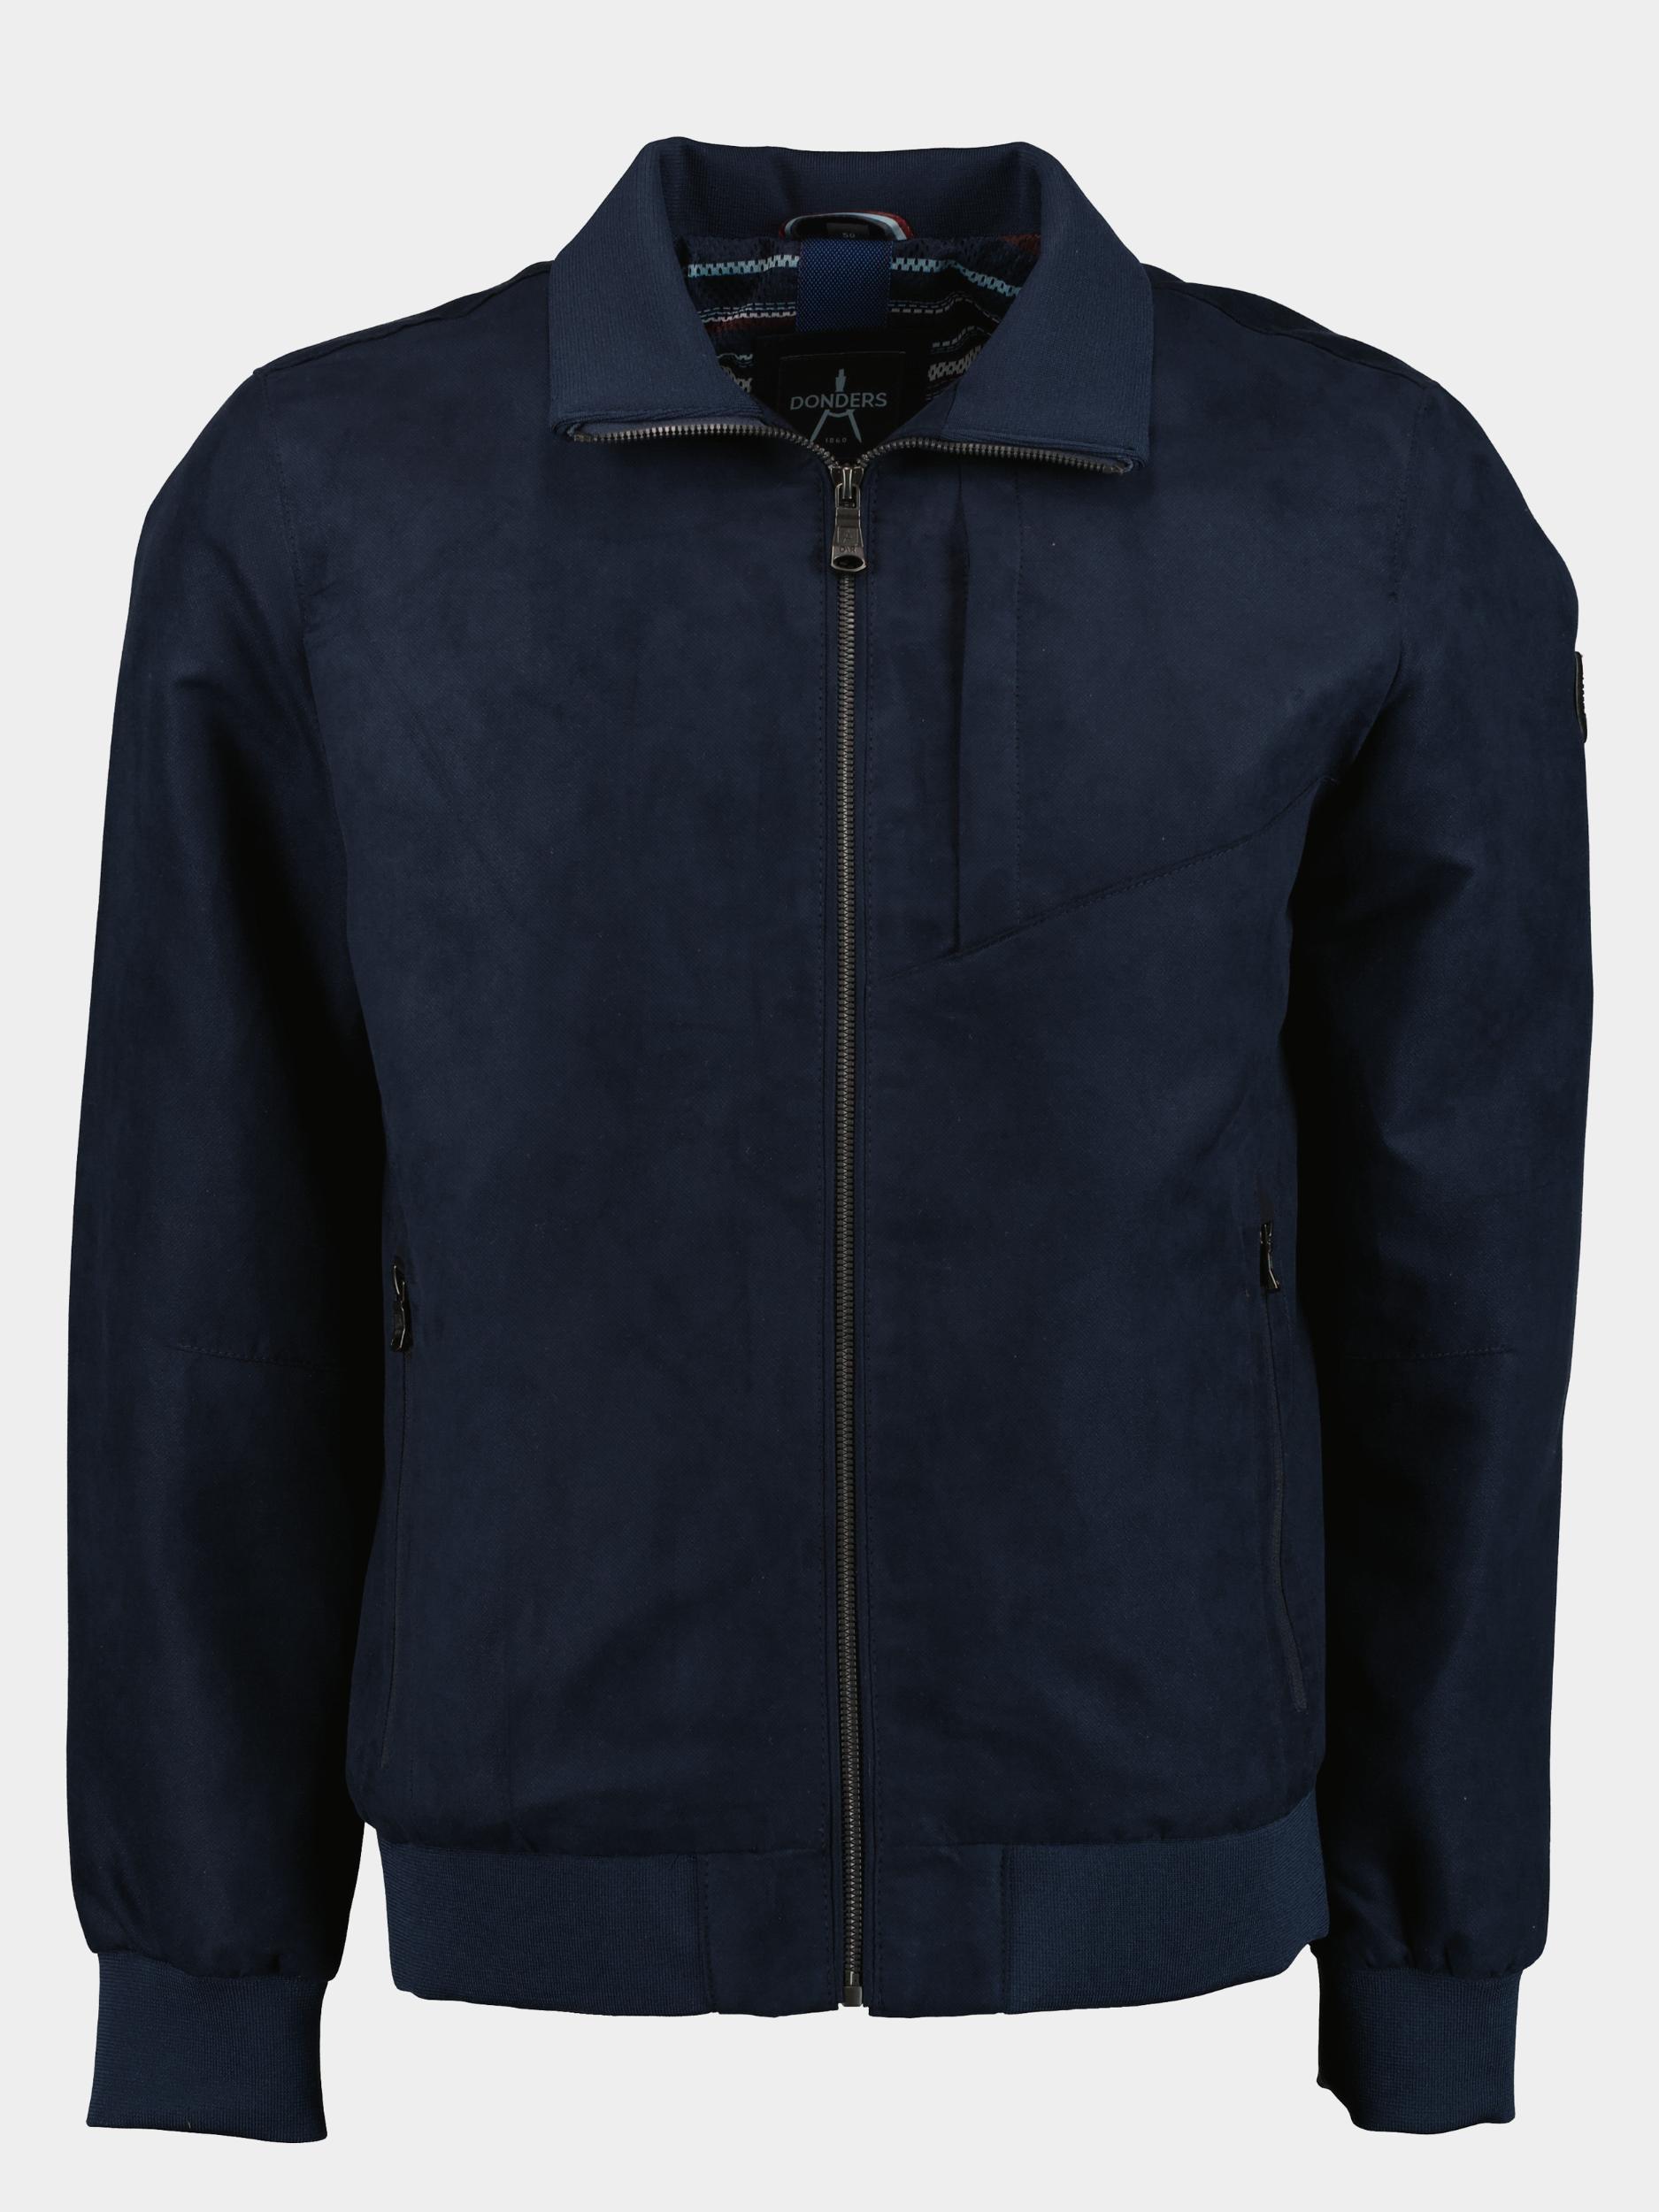 Donders 1860 Zomerjack Blauw Textile jacket 21677/790